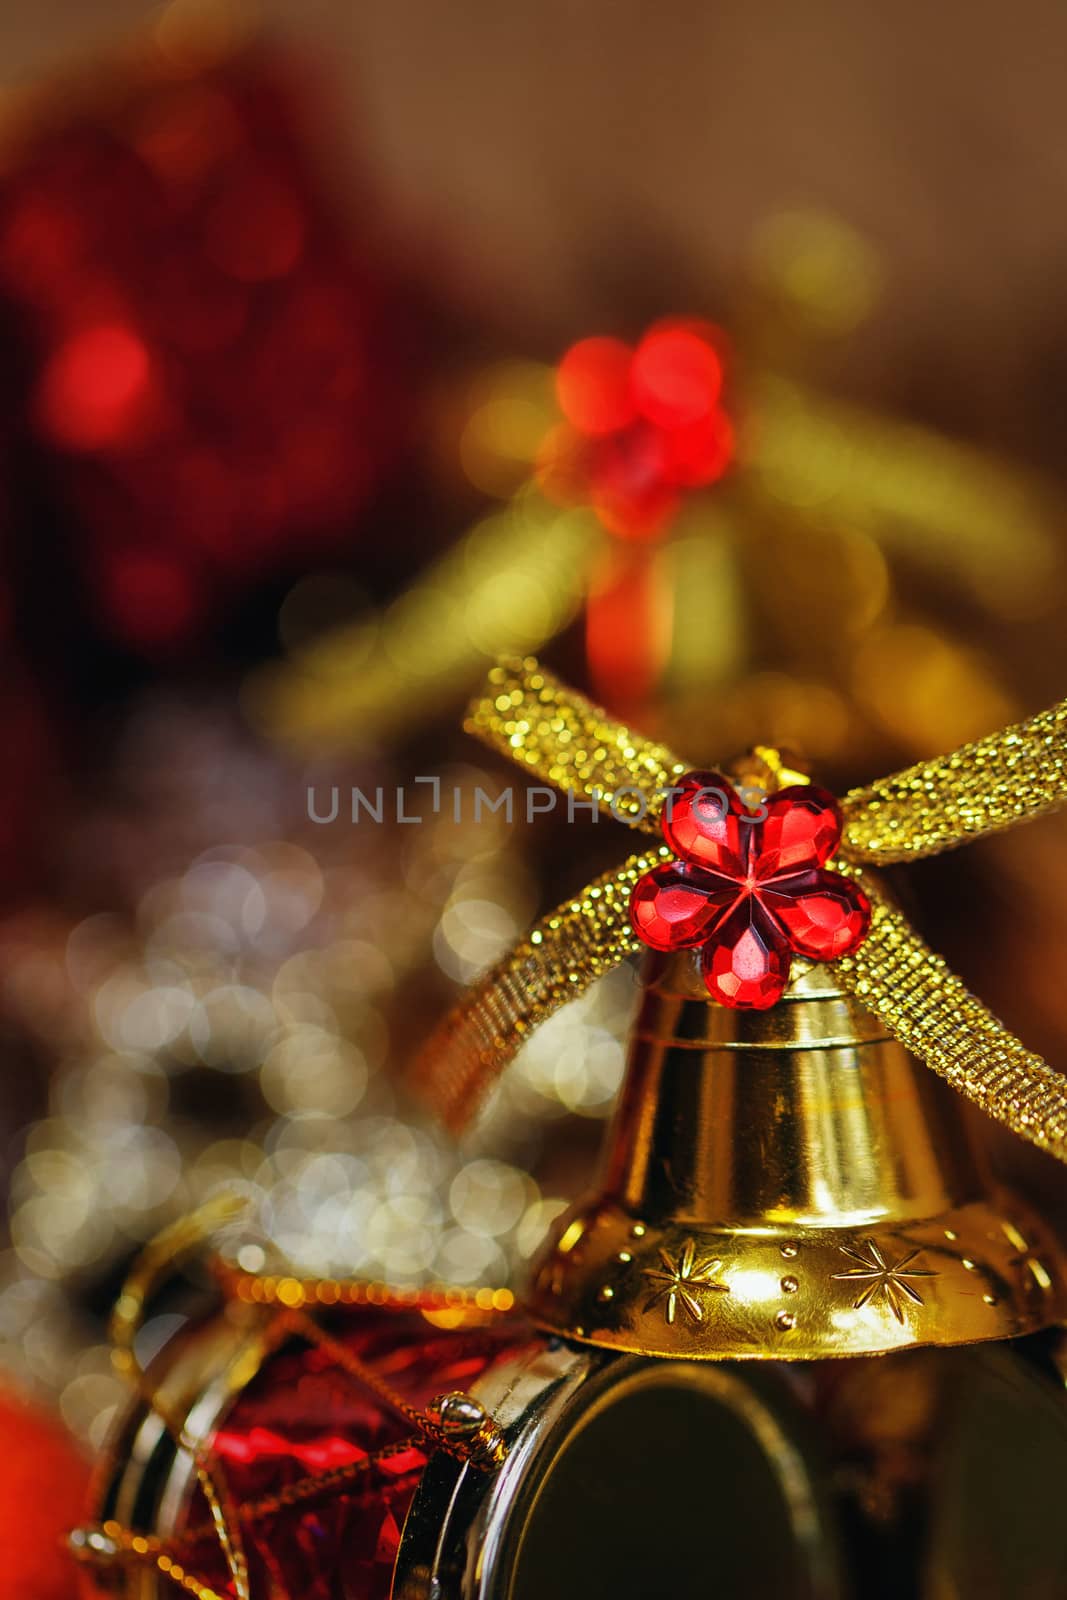 Festive Christmas golden bells photographed close-up background